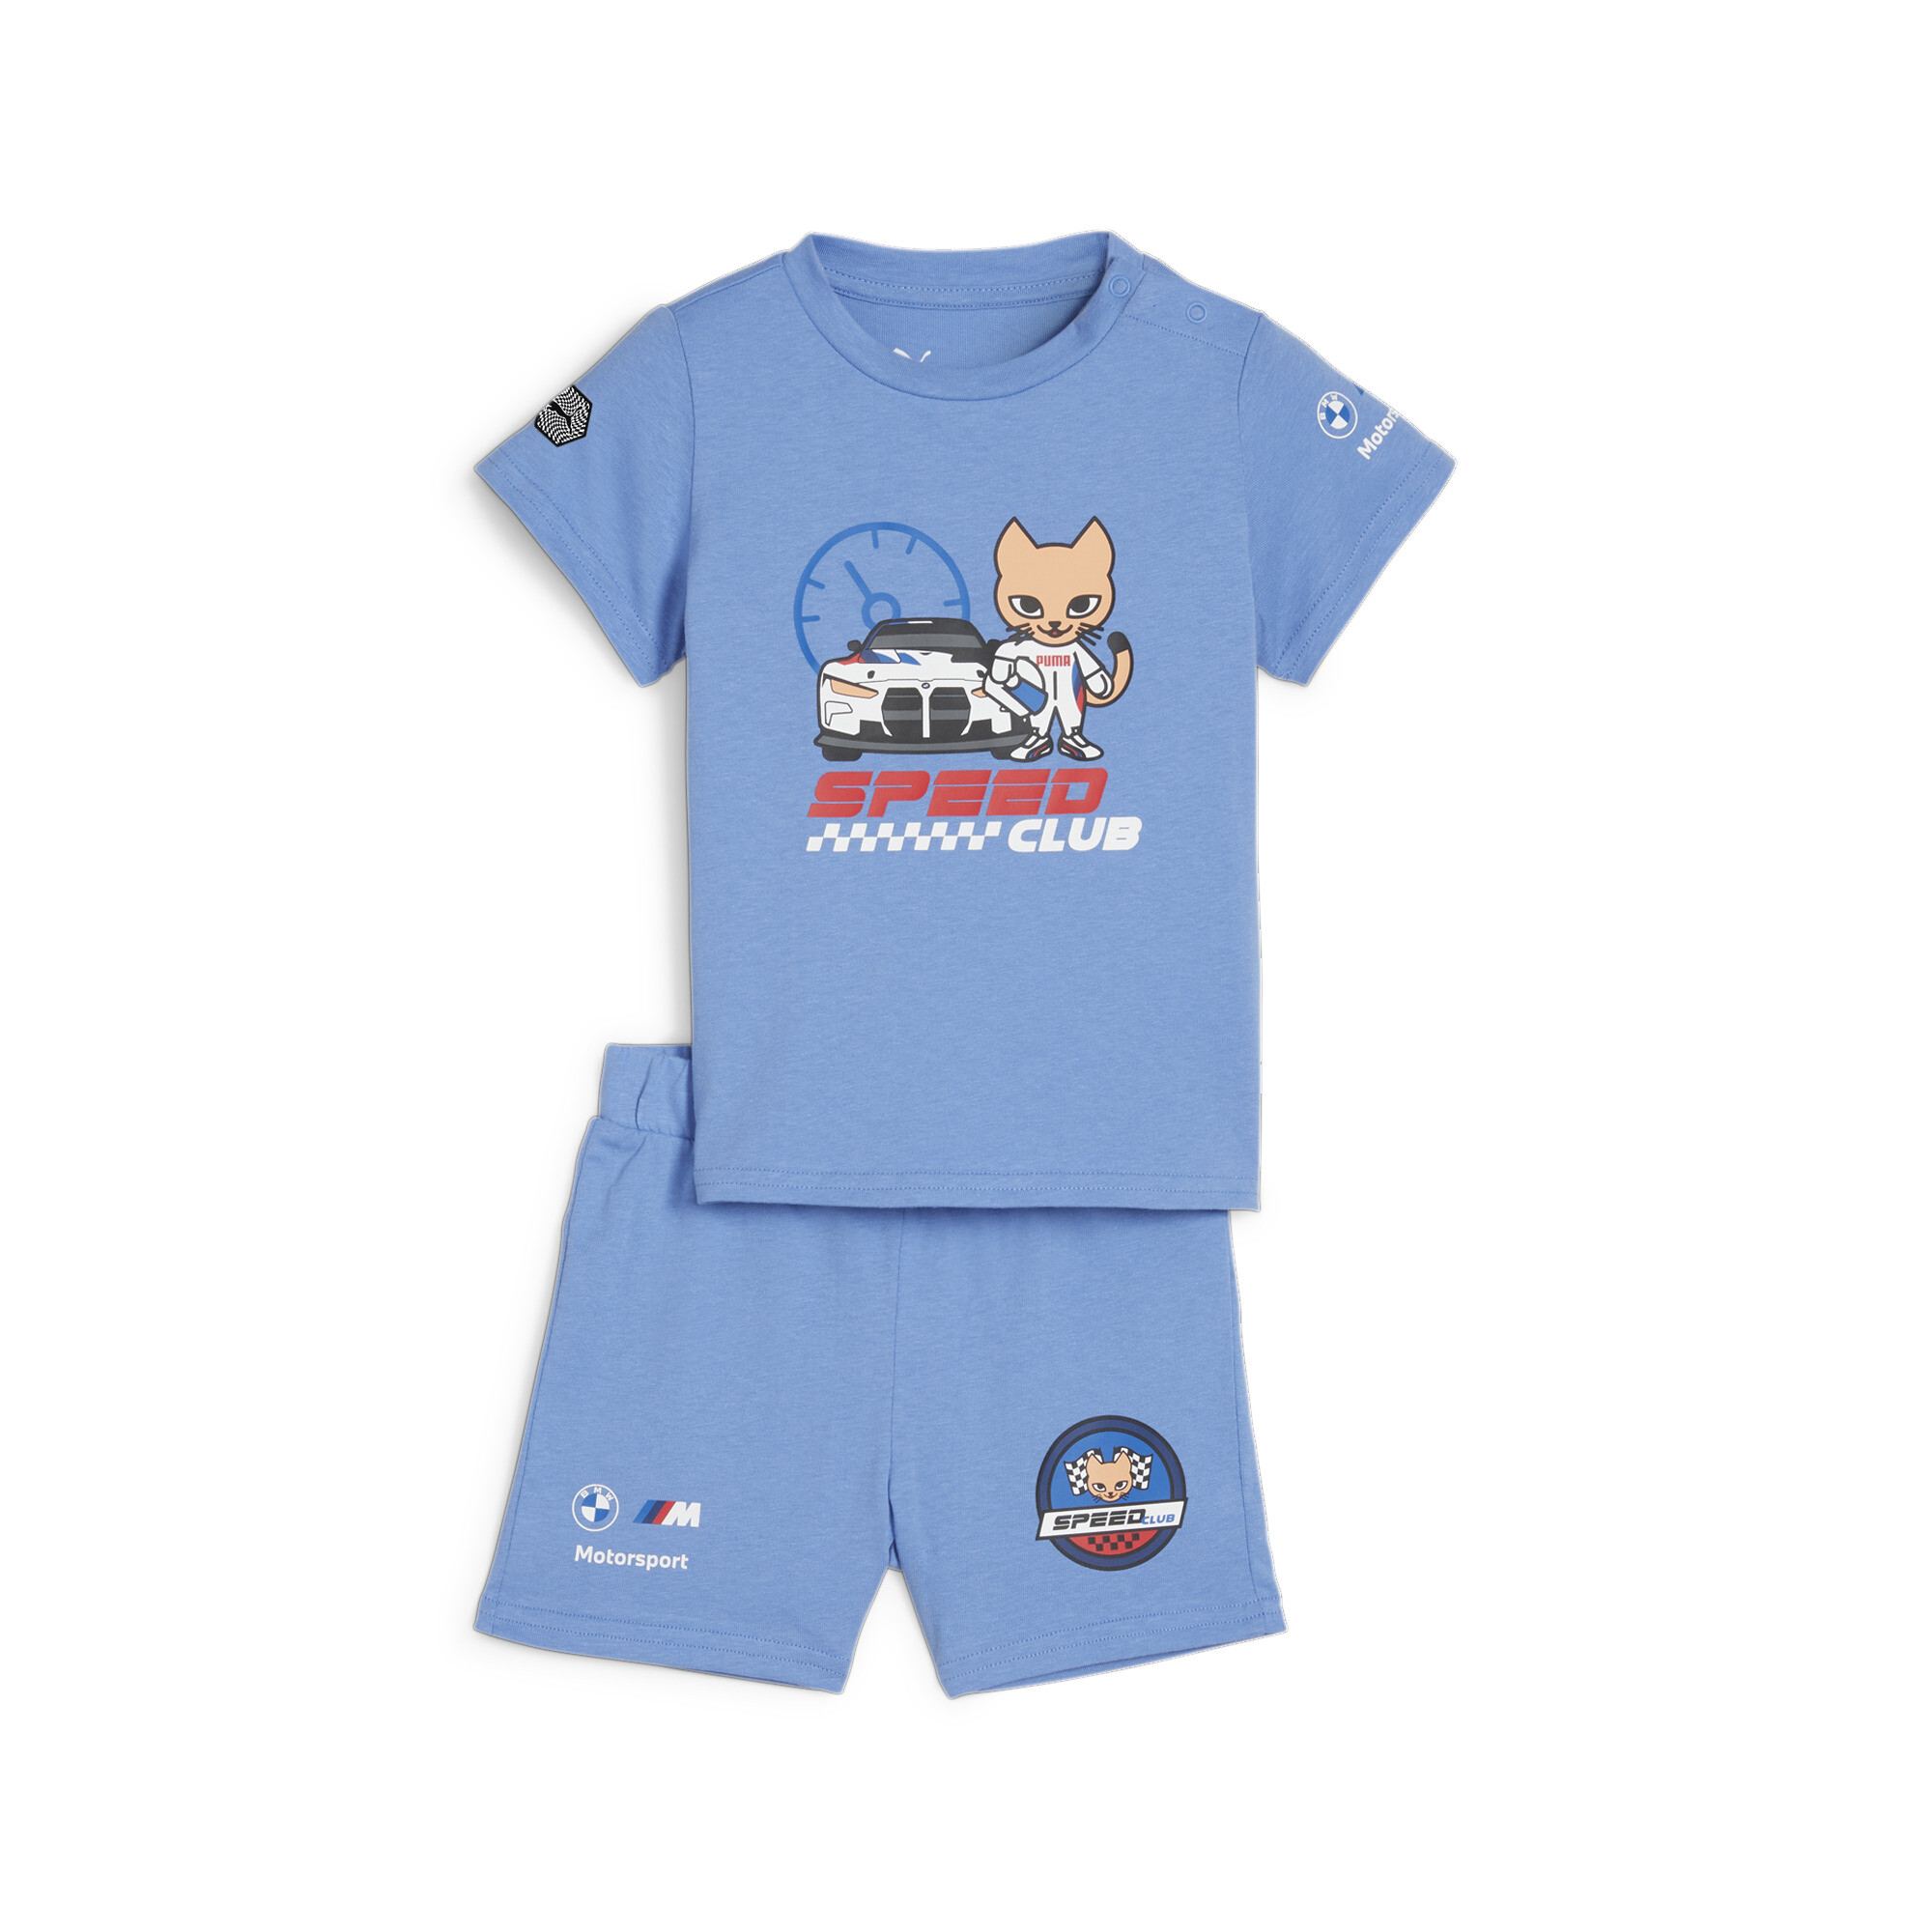 Puma BMW M Motorsport Toddlers' Set, Blue, Size 9-12M, Clothing